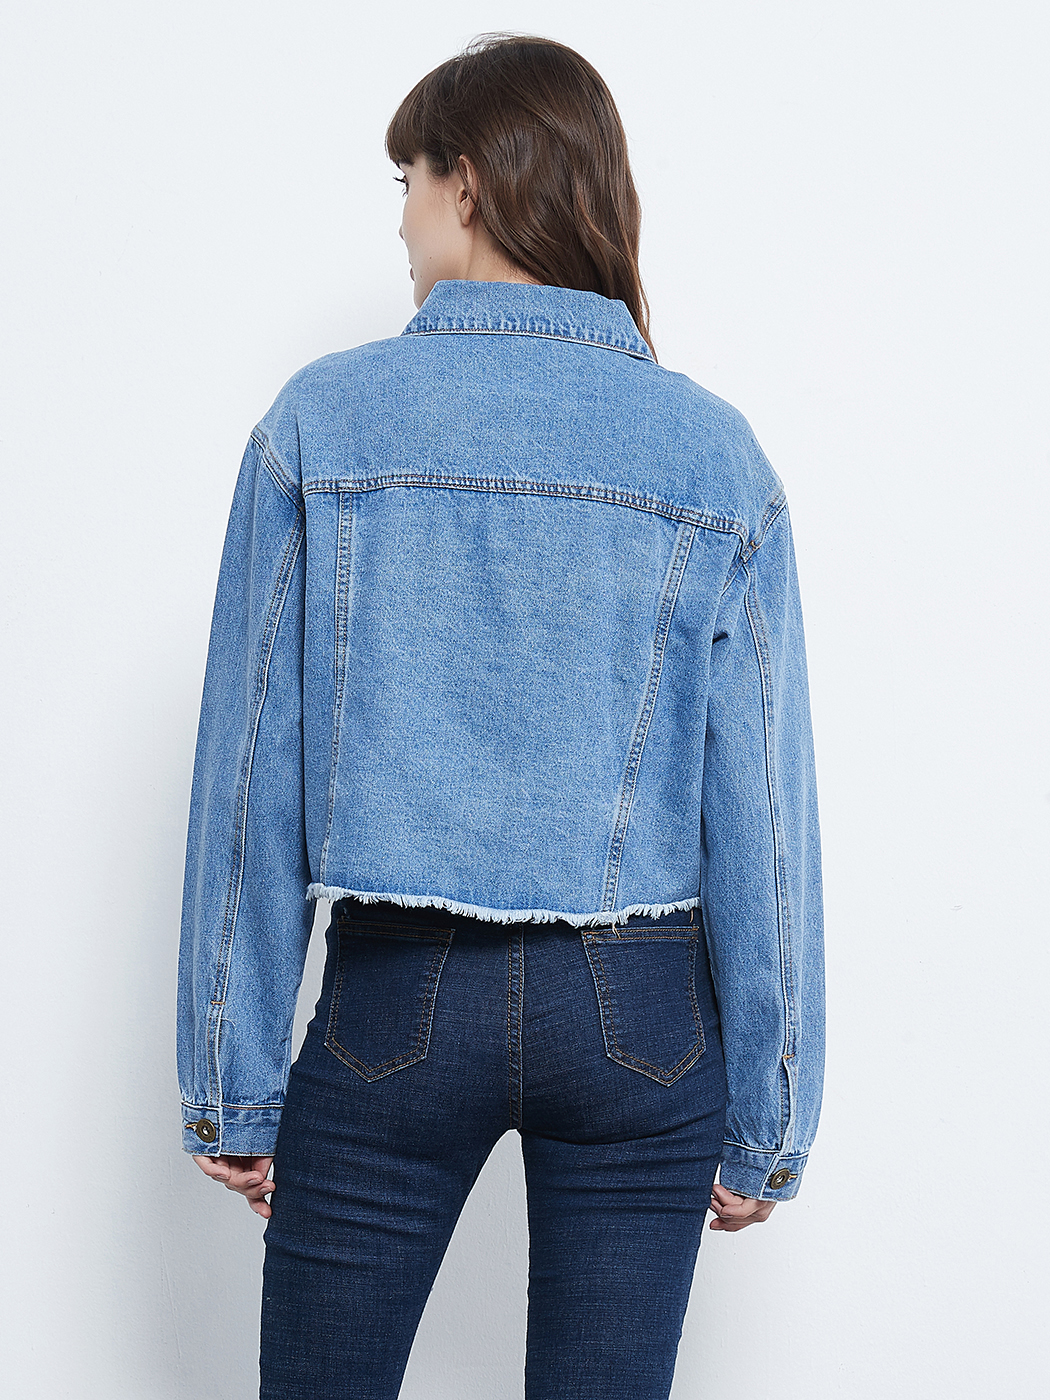 Women Jean Jacket Button Down Distressed Oversized Denim Jackets Coat, Light Blue, Medium - image 5 of 6